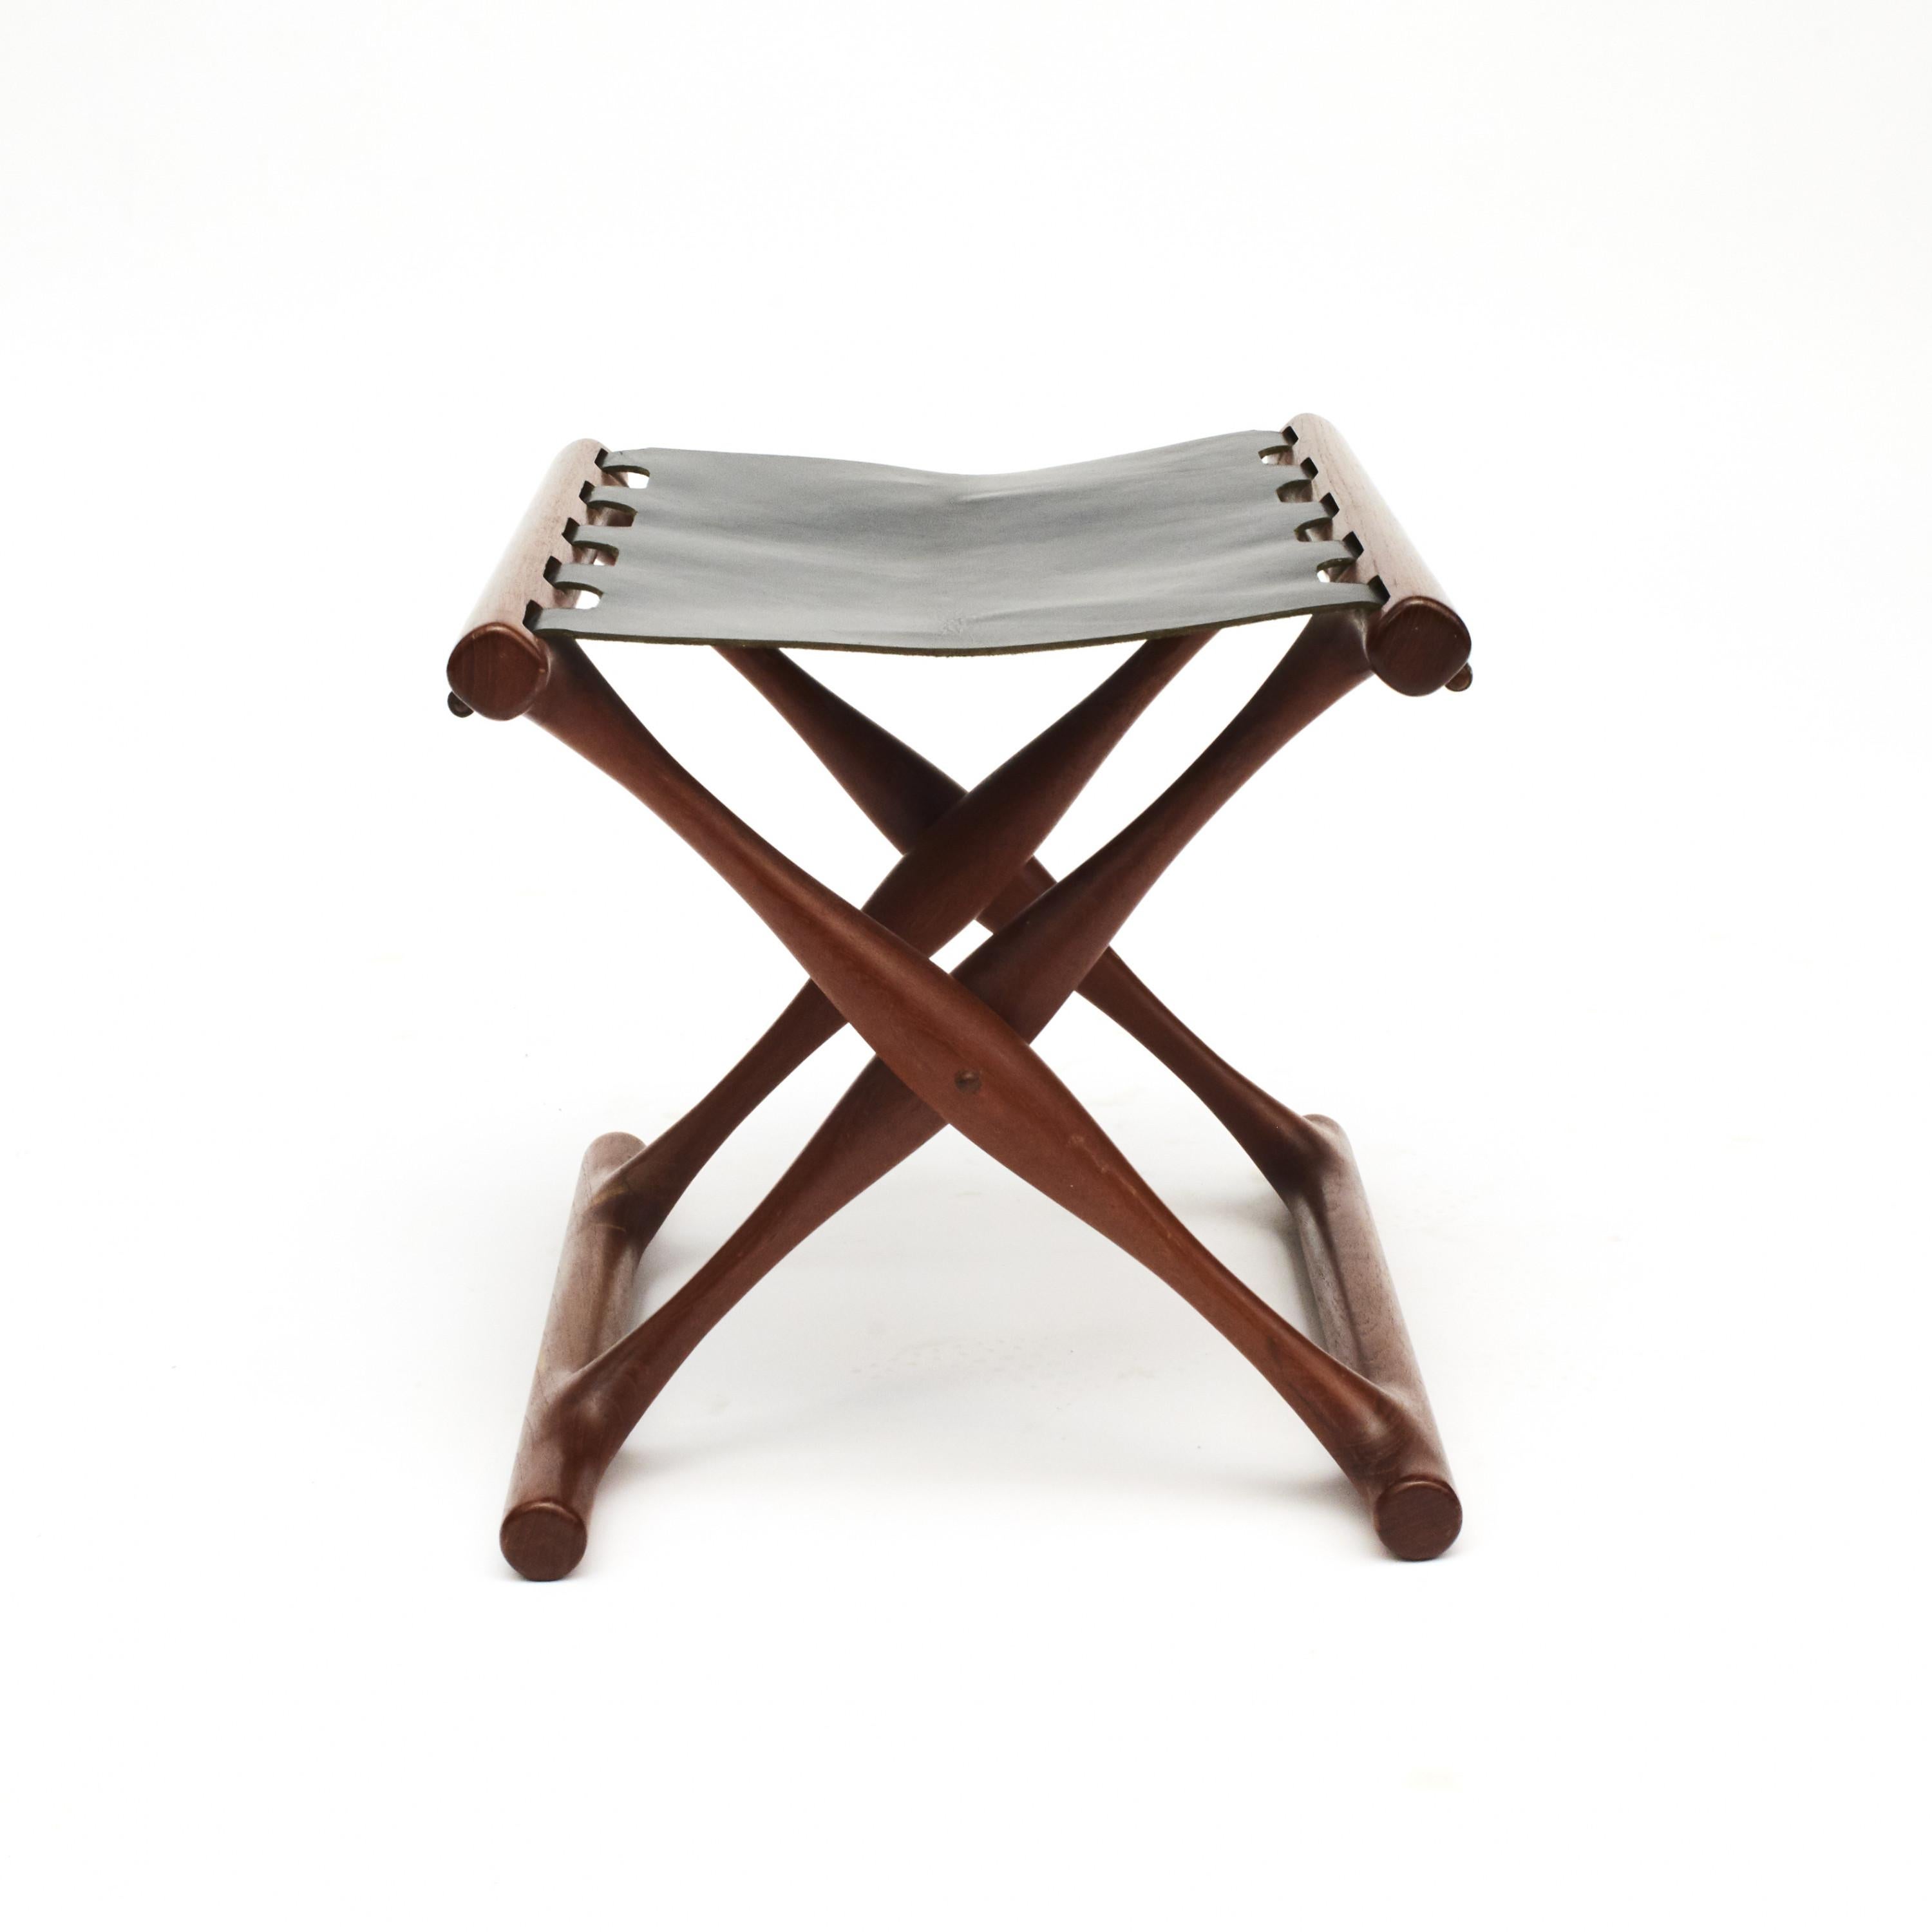 “Gold Hill” (Guldhøj) teak folding stool by Poul Hundevad. Model PH 43.
Teak frame and original black leather sling seat.
Original condition with good natural patina.
Produced by Poul Hundevad in Vamdrup, Denmark, 1958-1965.
   